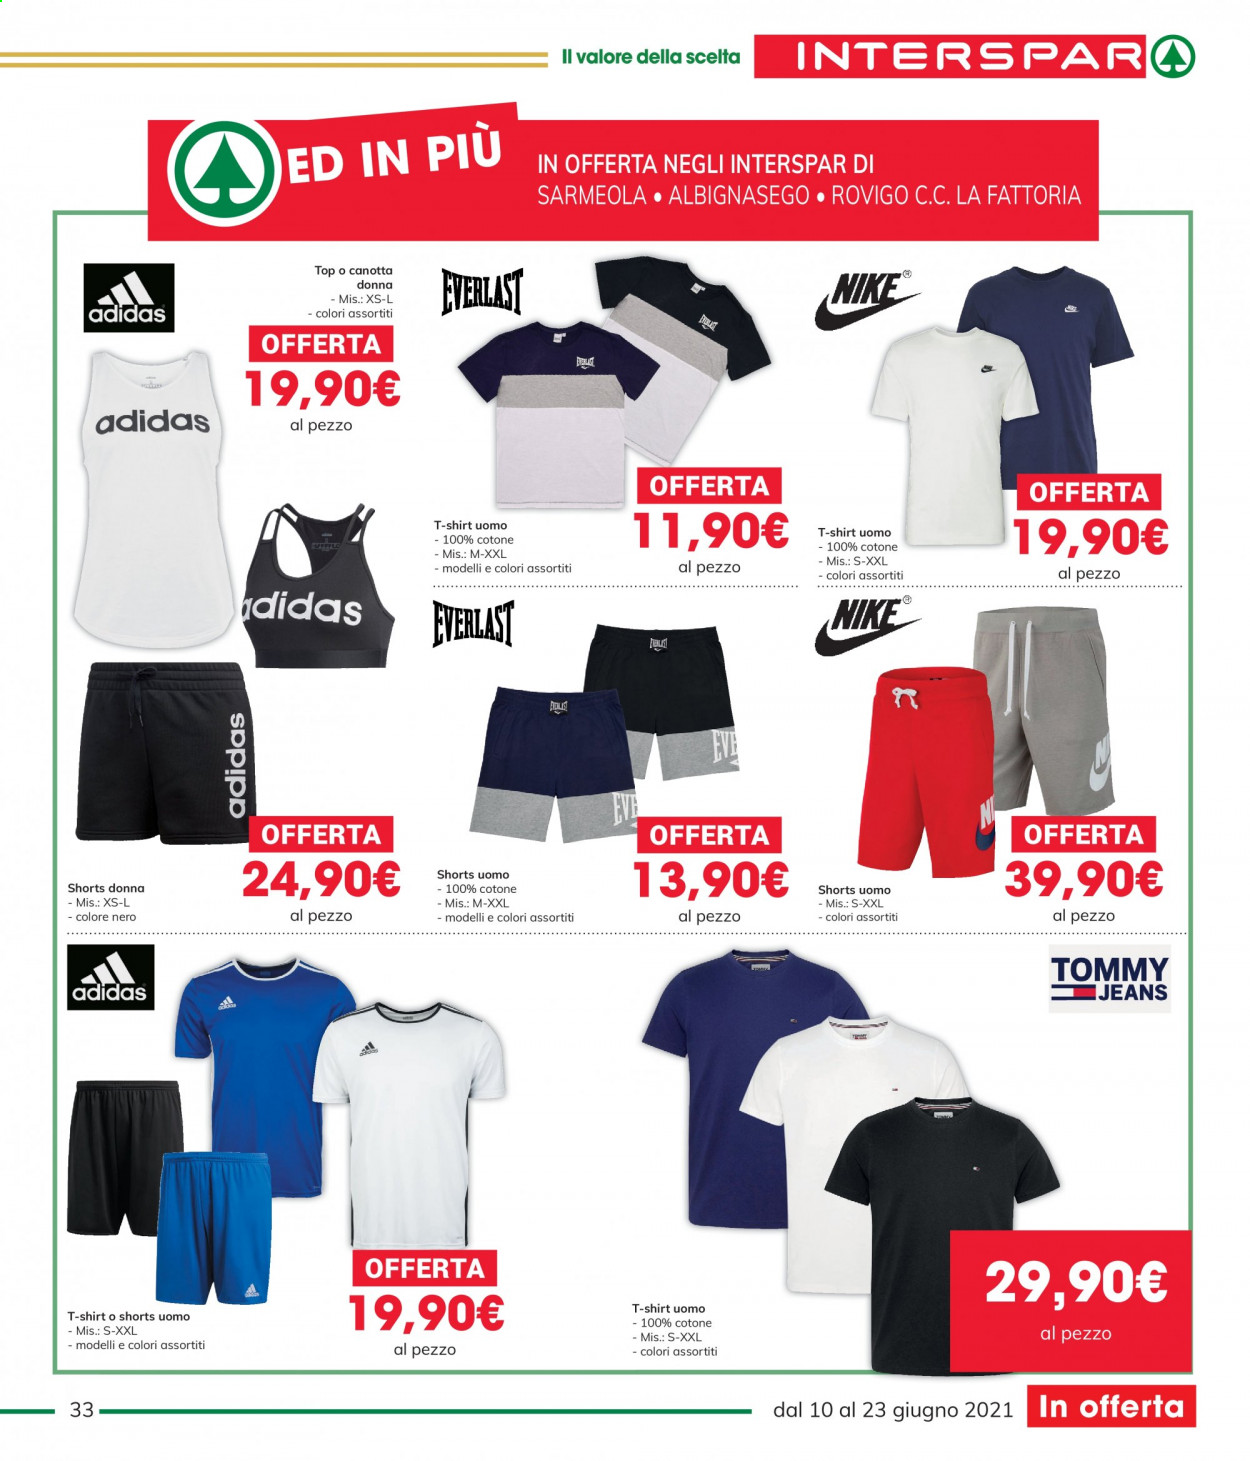 thumbnail - Volantino Interspar - 10/6/2021 - 23/6/2021 - Prodotti in offerta - Adidas, Nike, La Fattoria, jeans, t-shirt. Pagina 33.